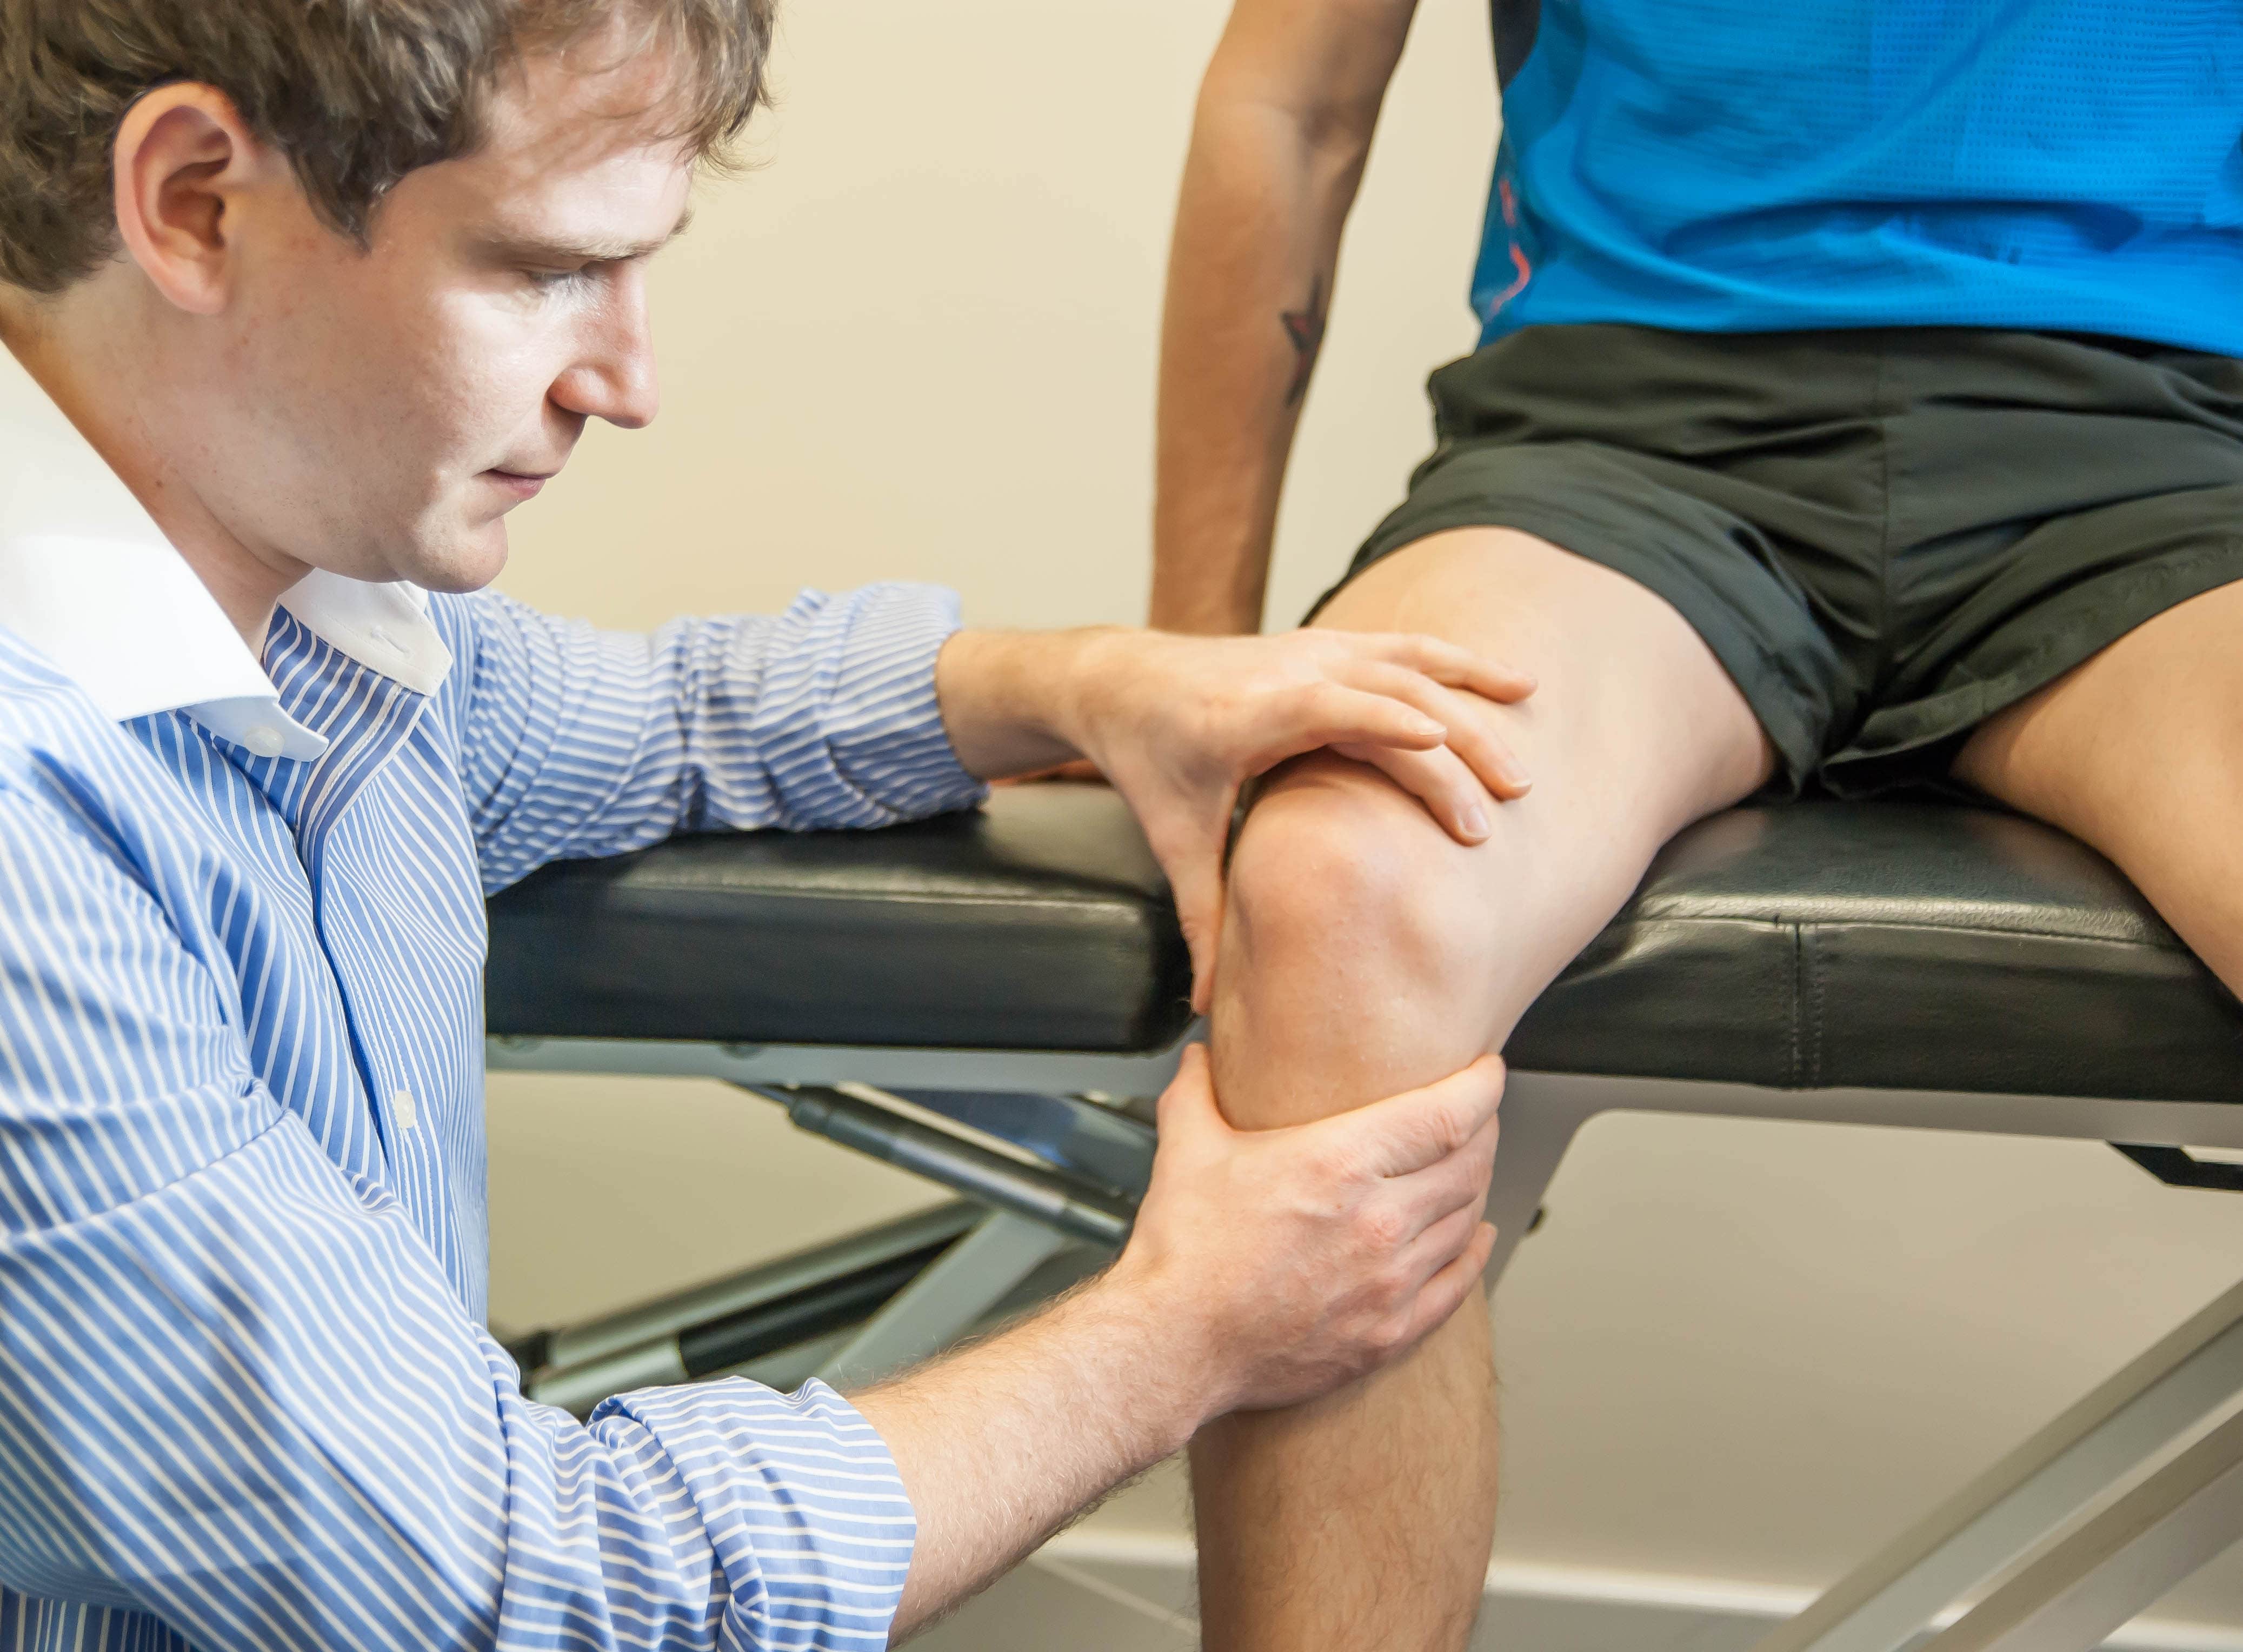 Knee Pain FAQs